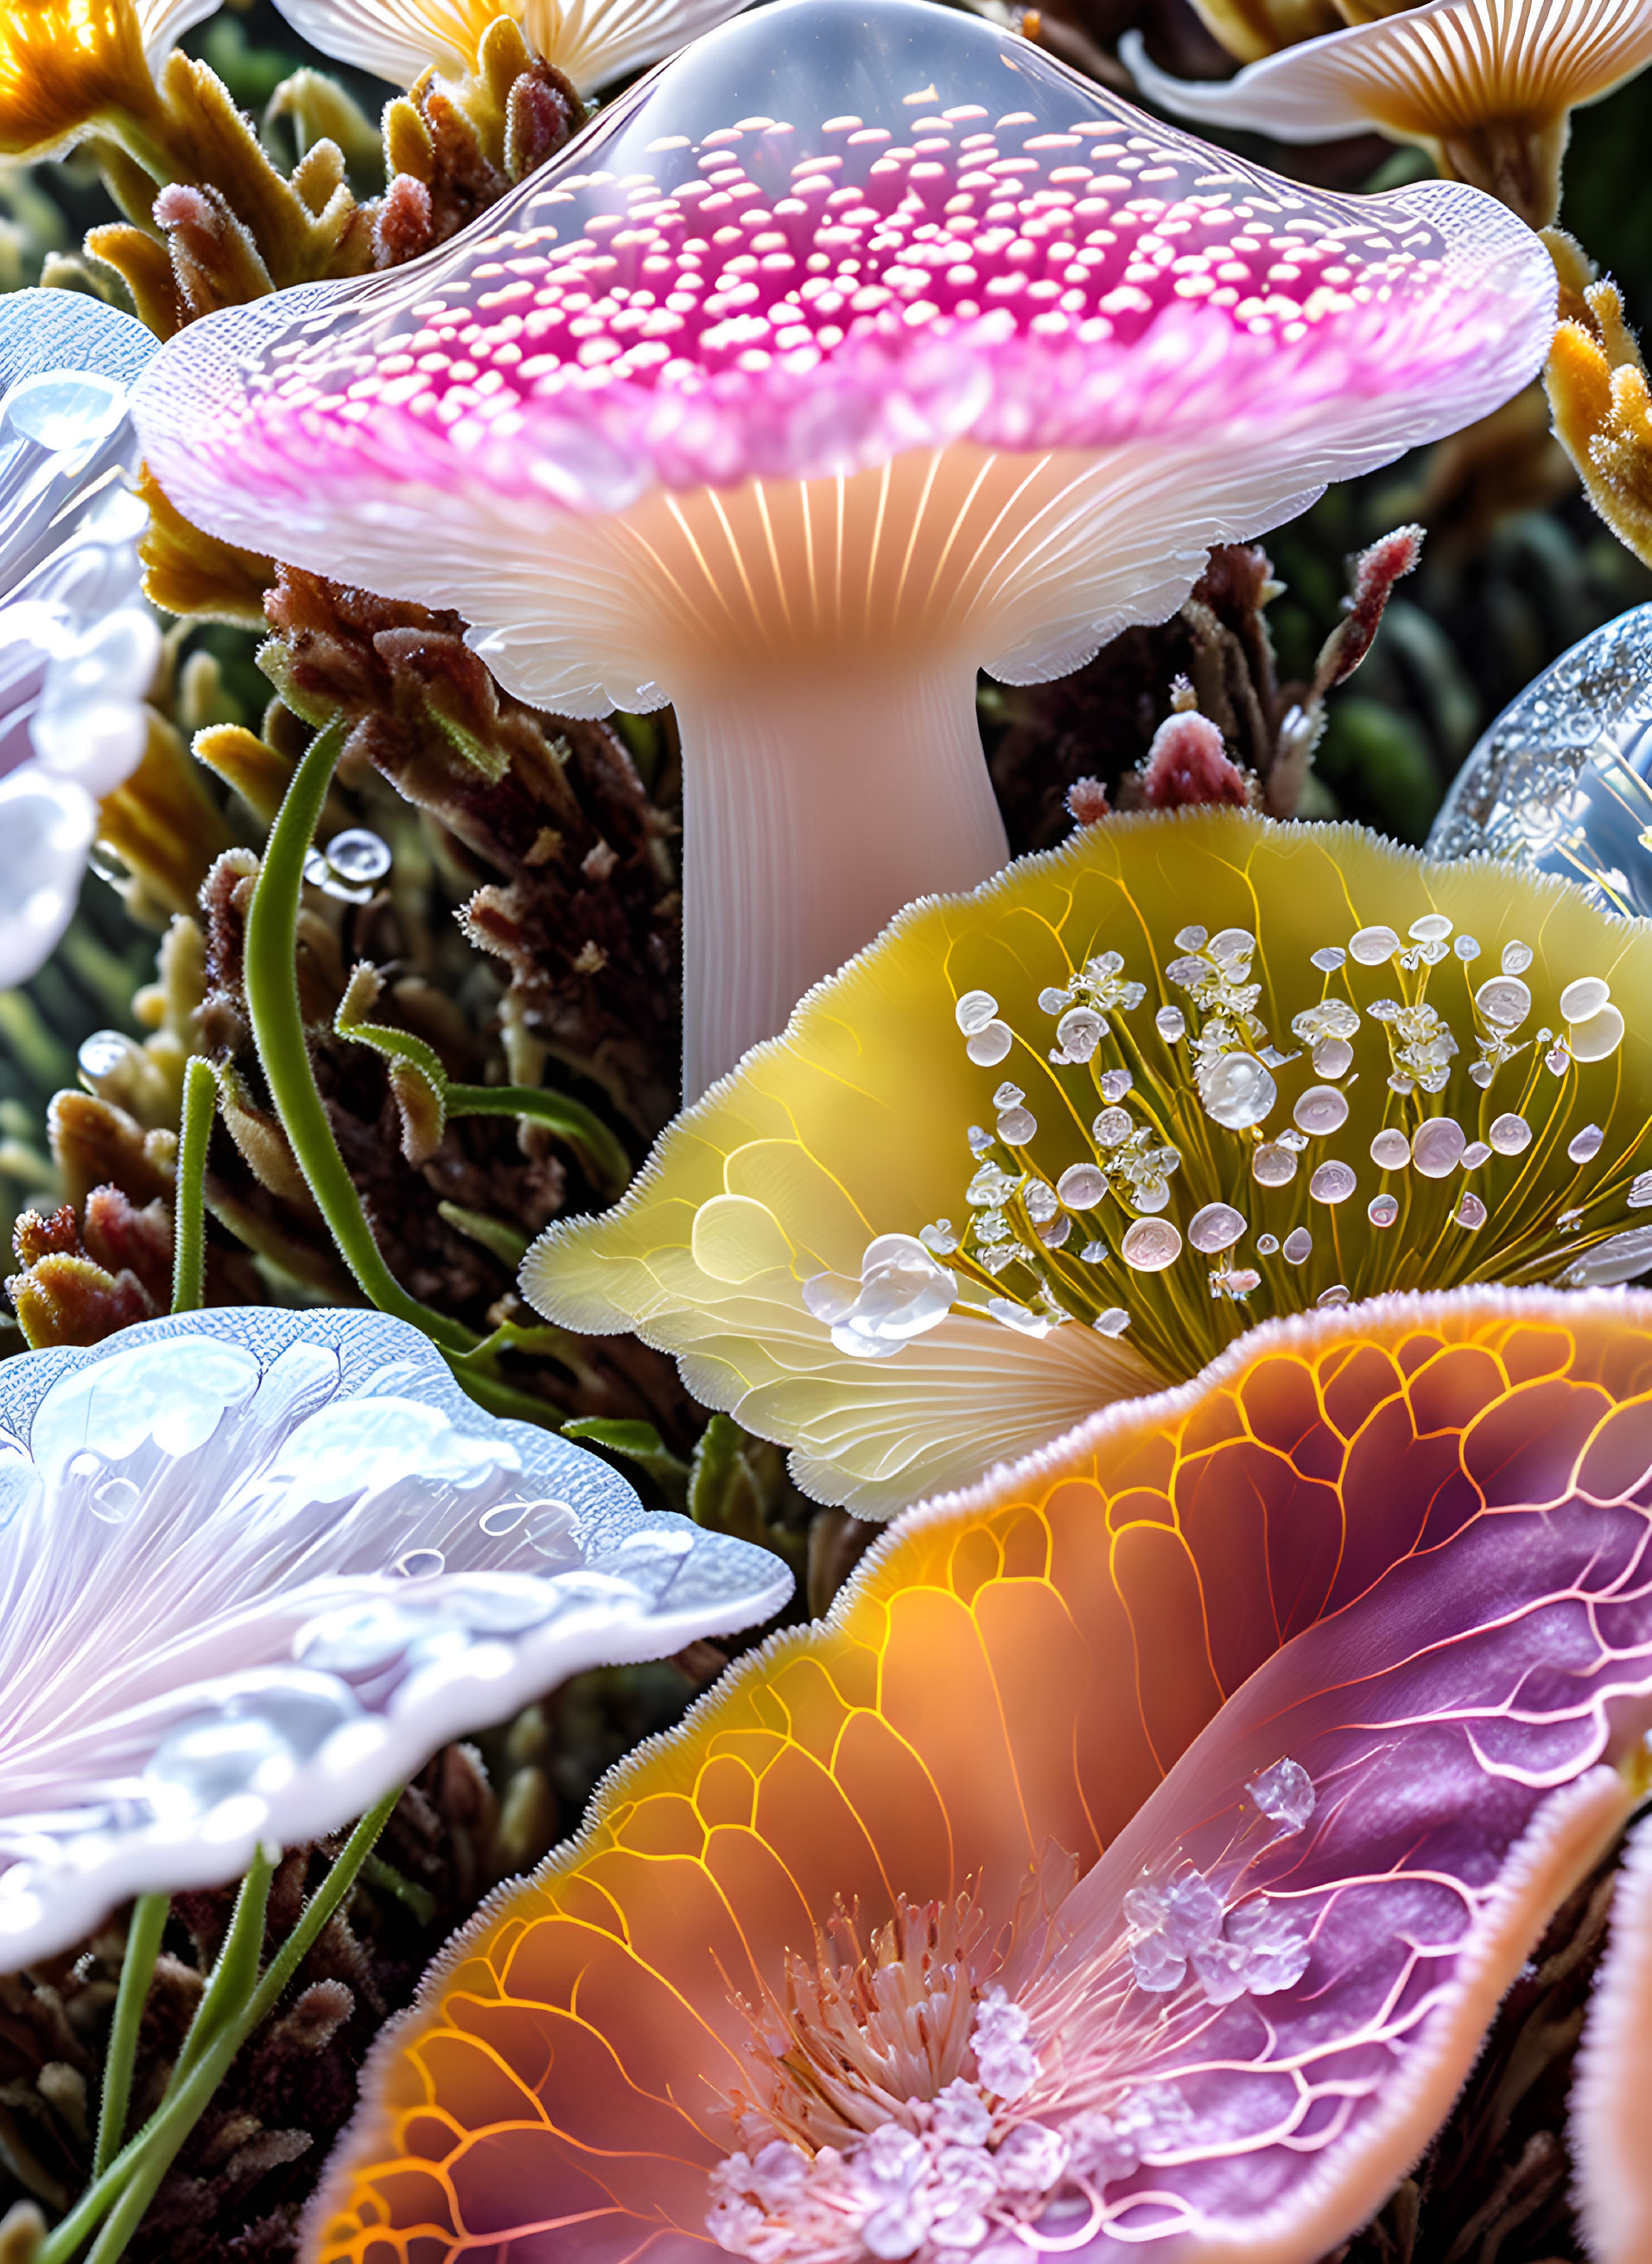 Jelly Mushrooms